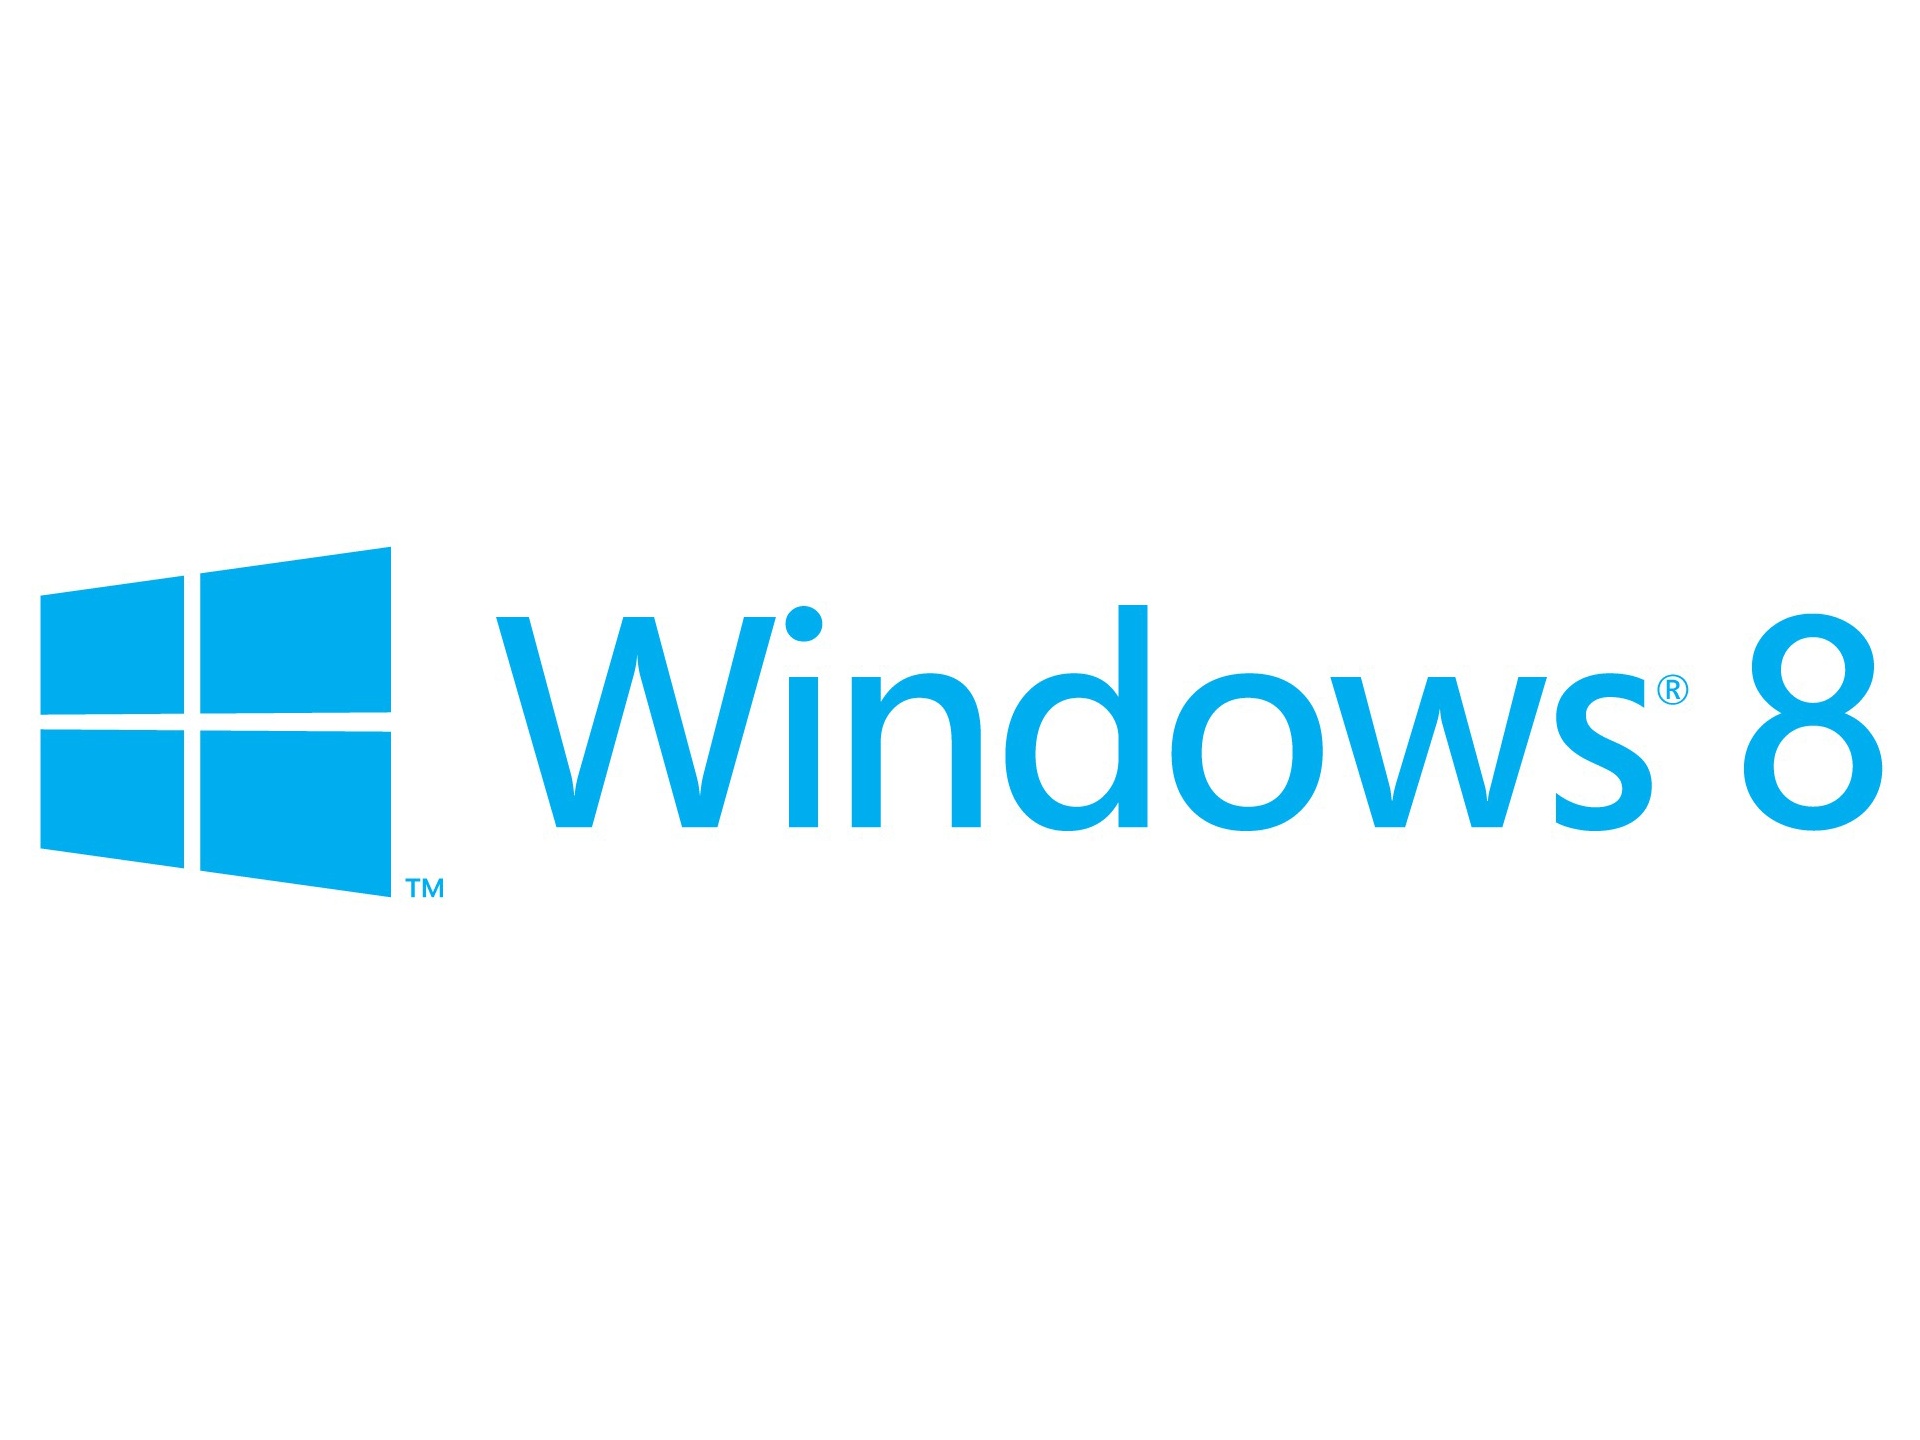 Windows 8 Will Make or Break Microsoft